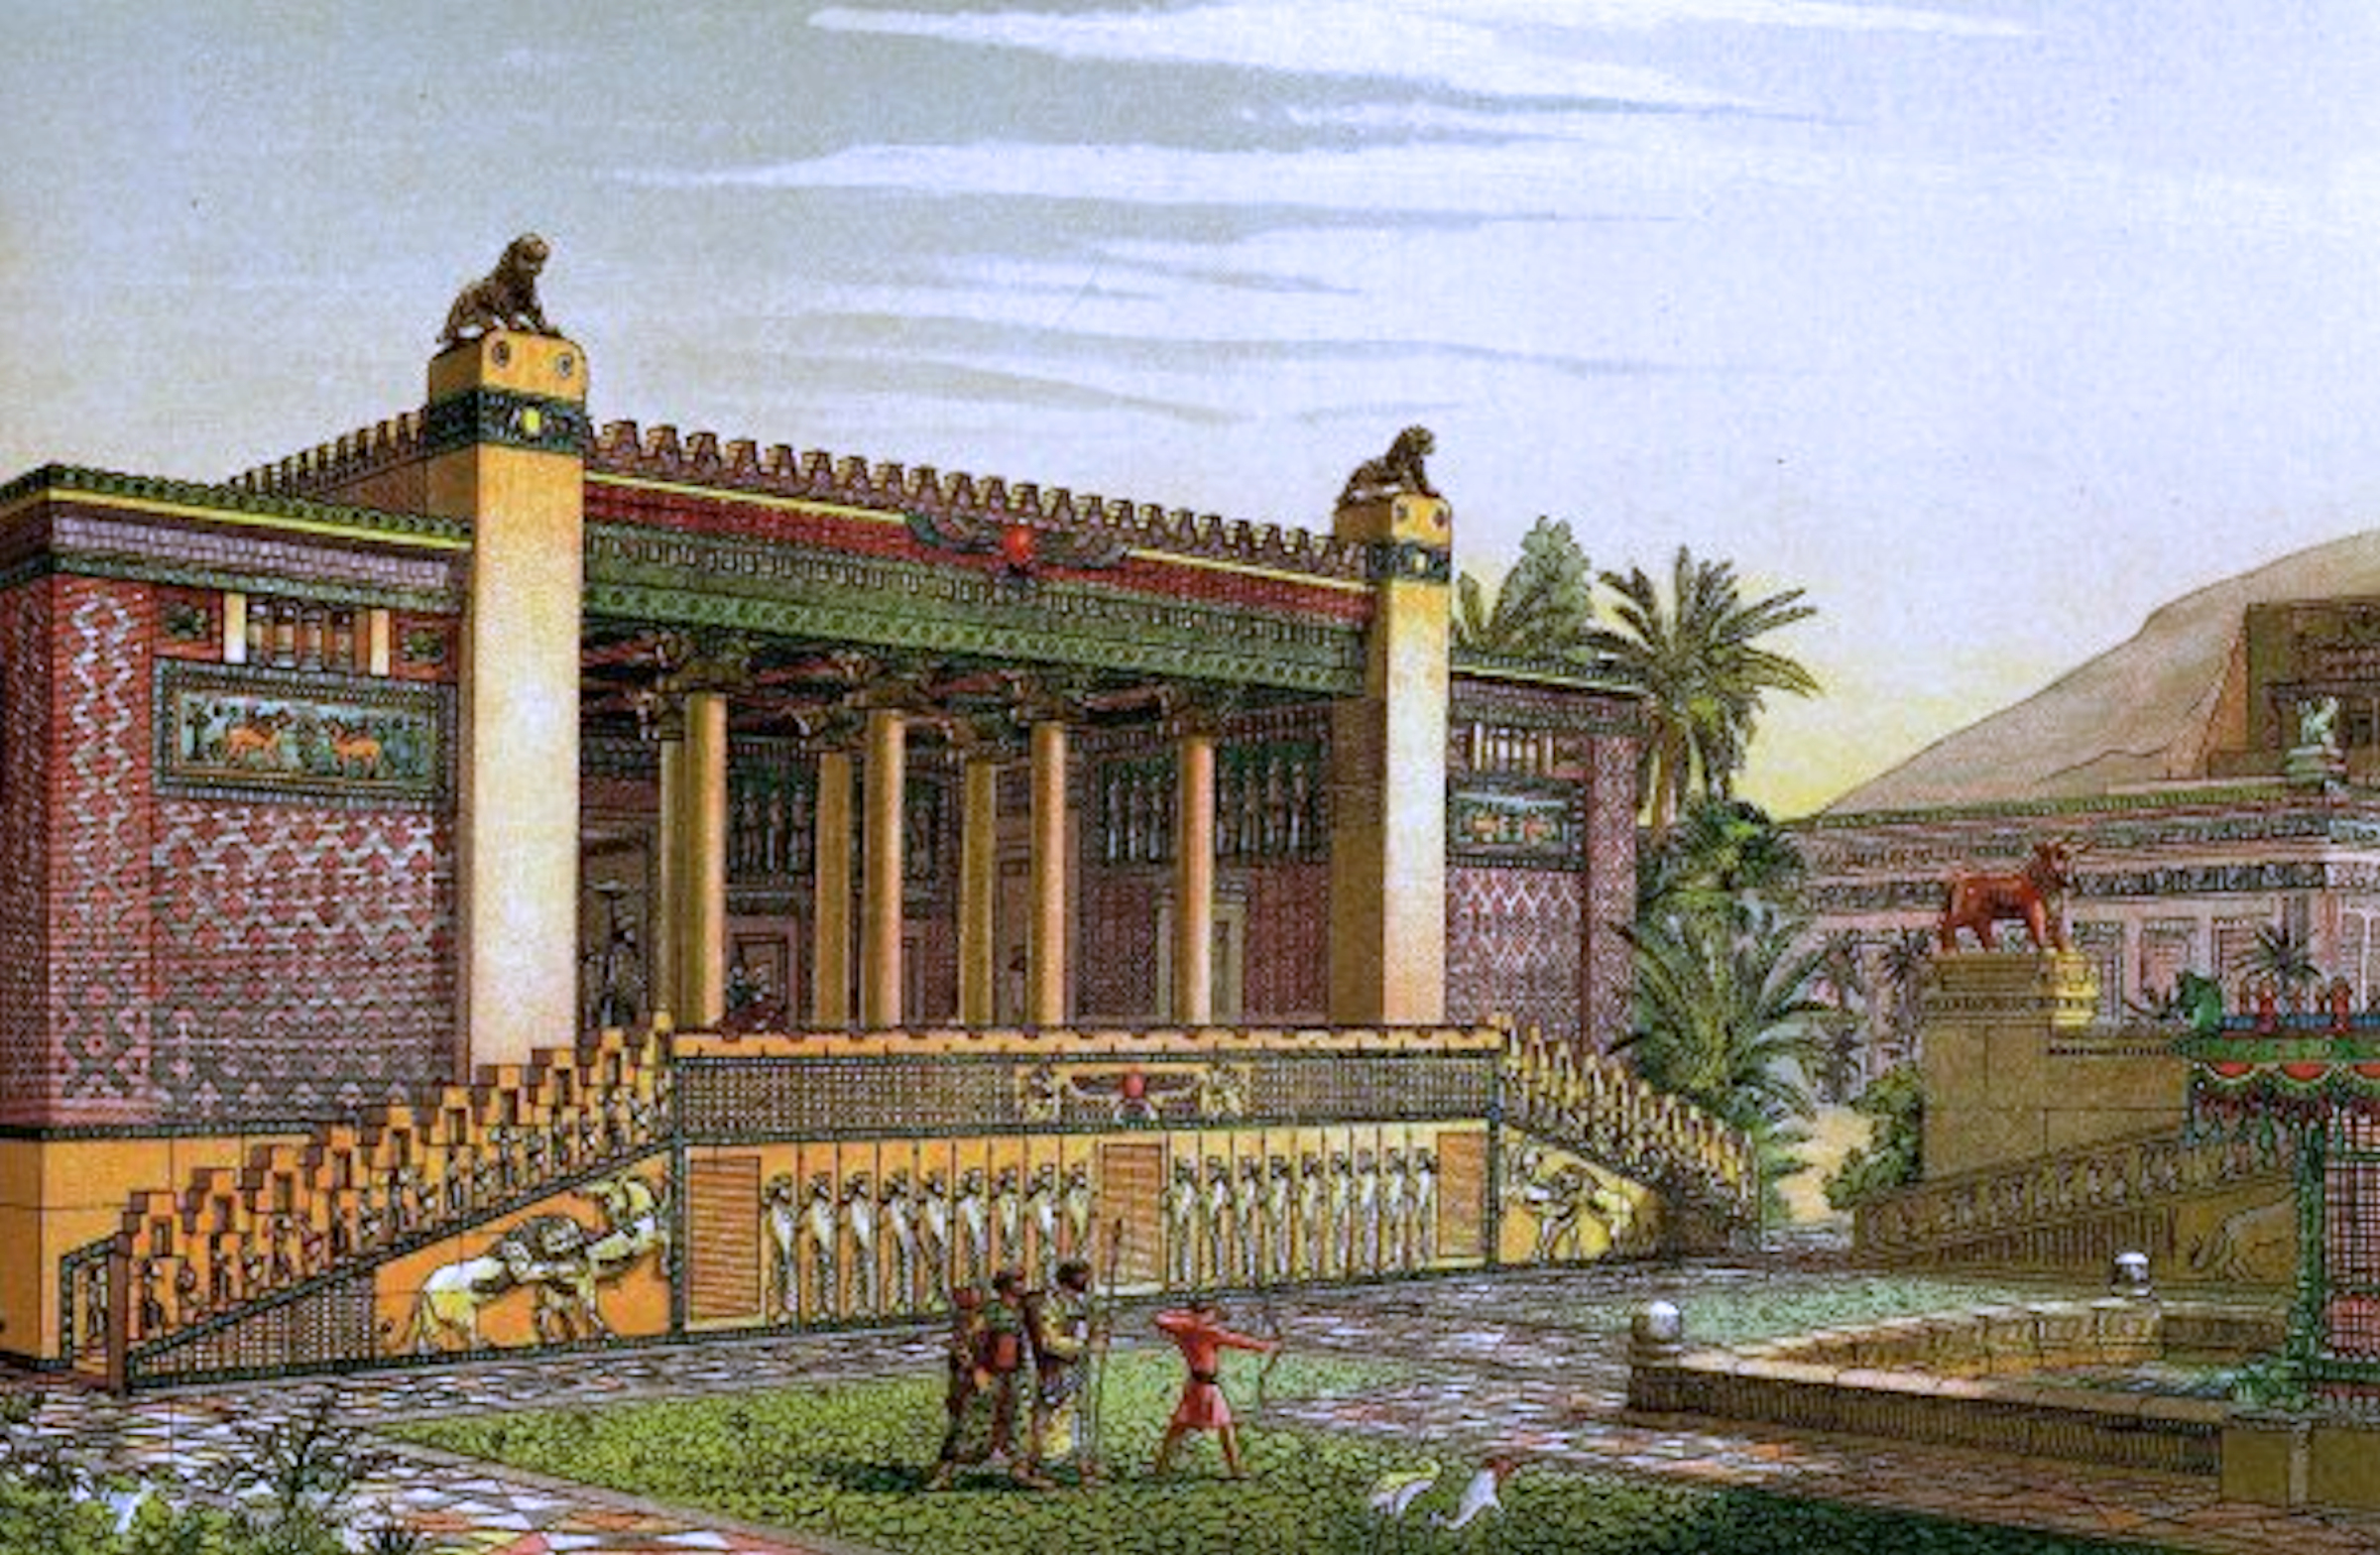 An artist's interpretation of Persepolis, Persia's grand capital.